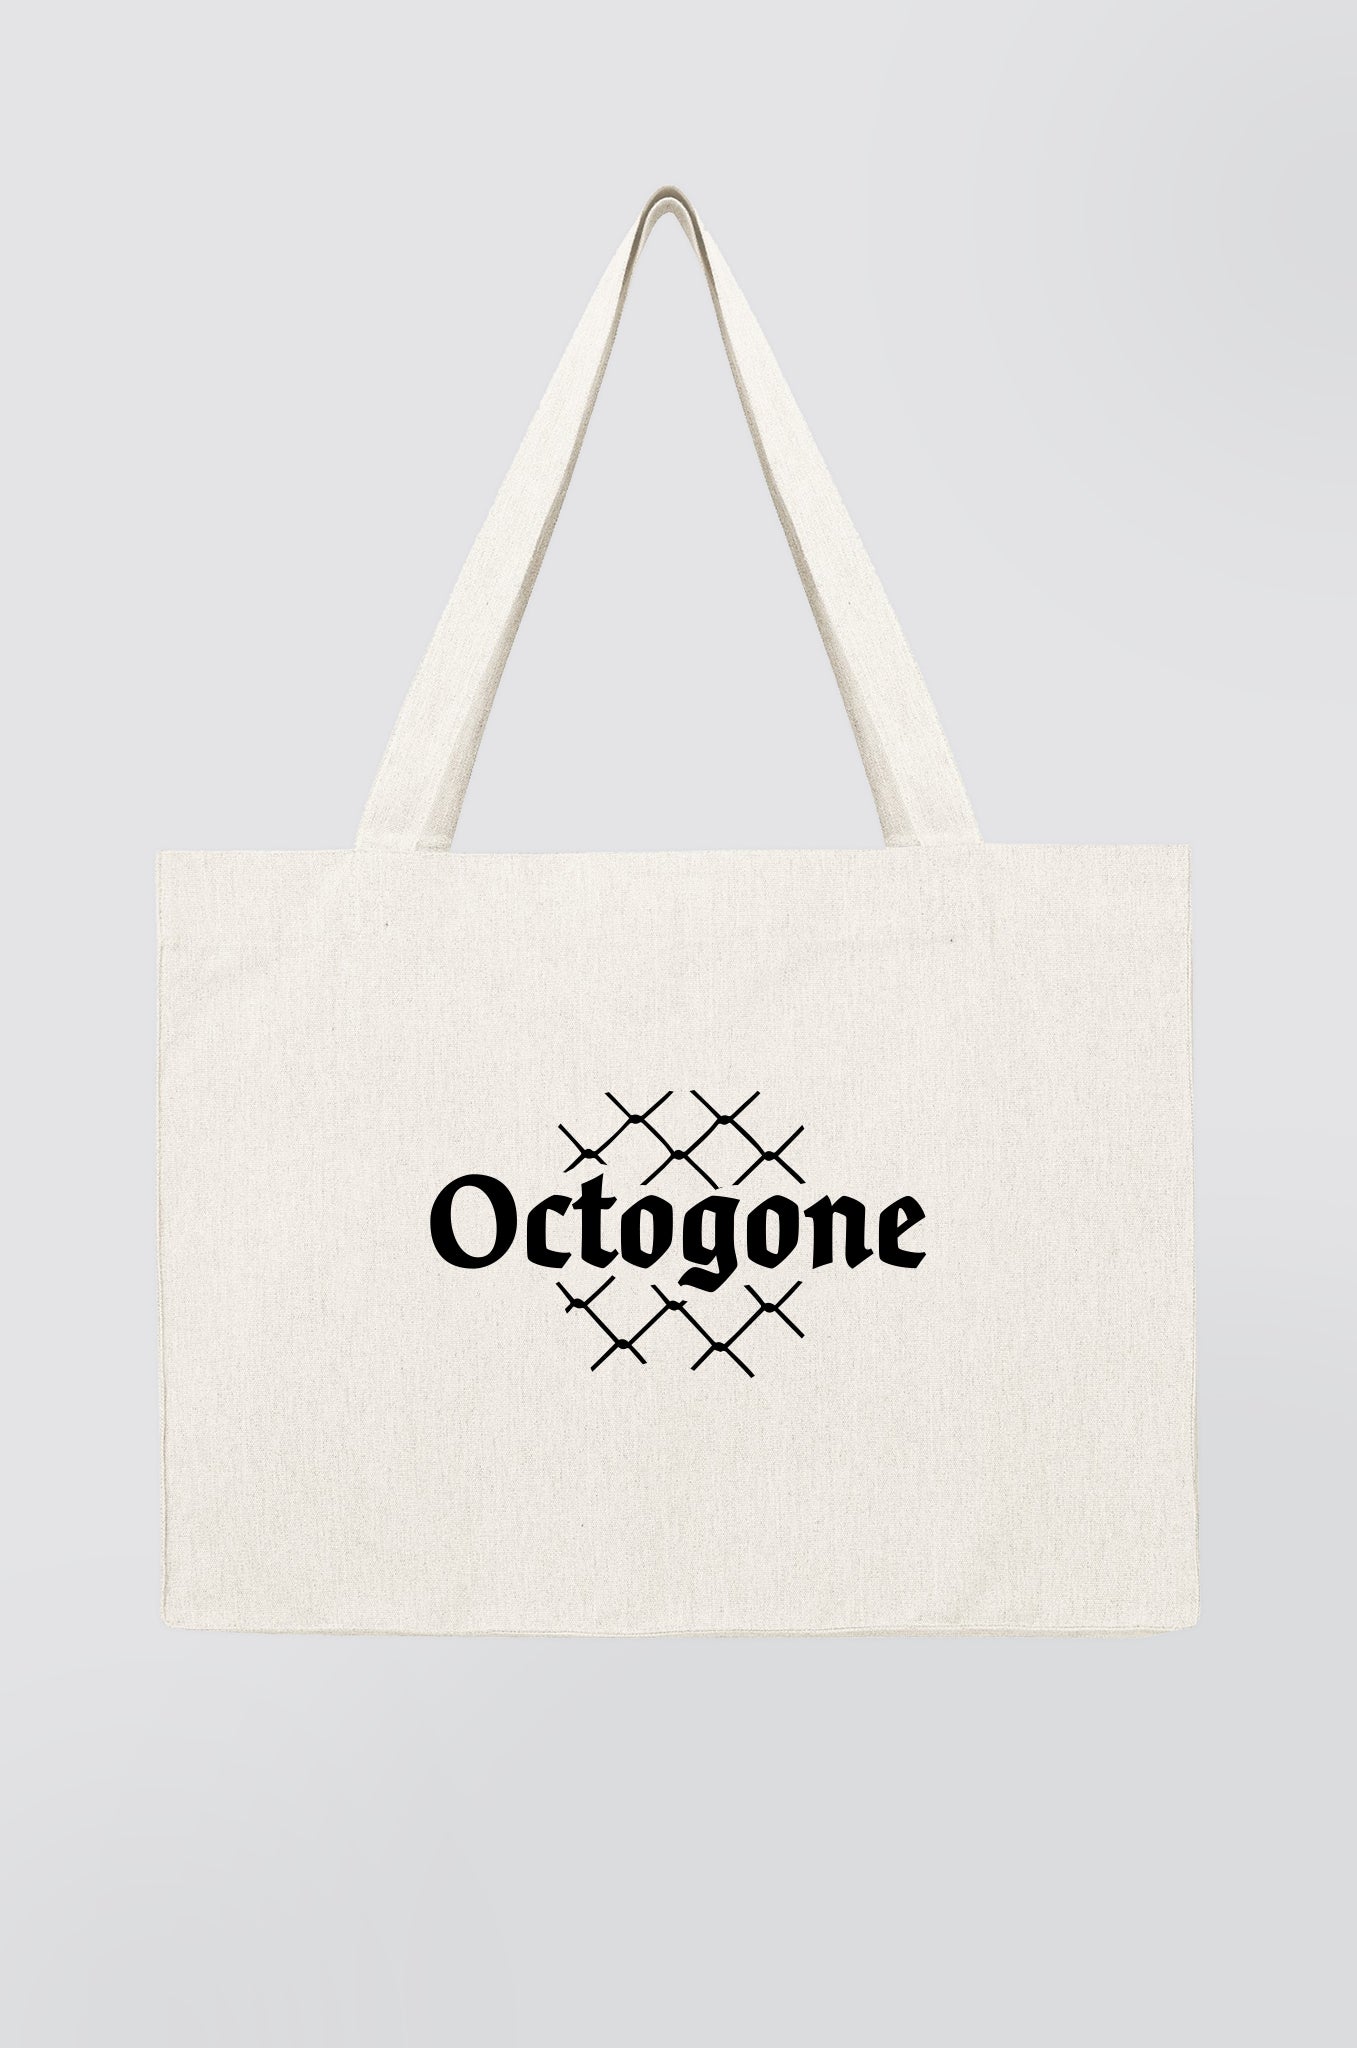 Octogone